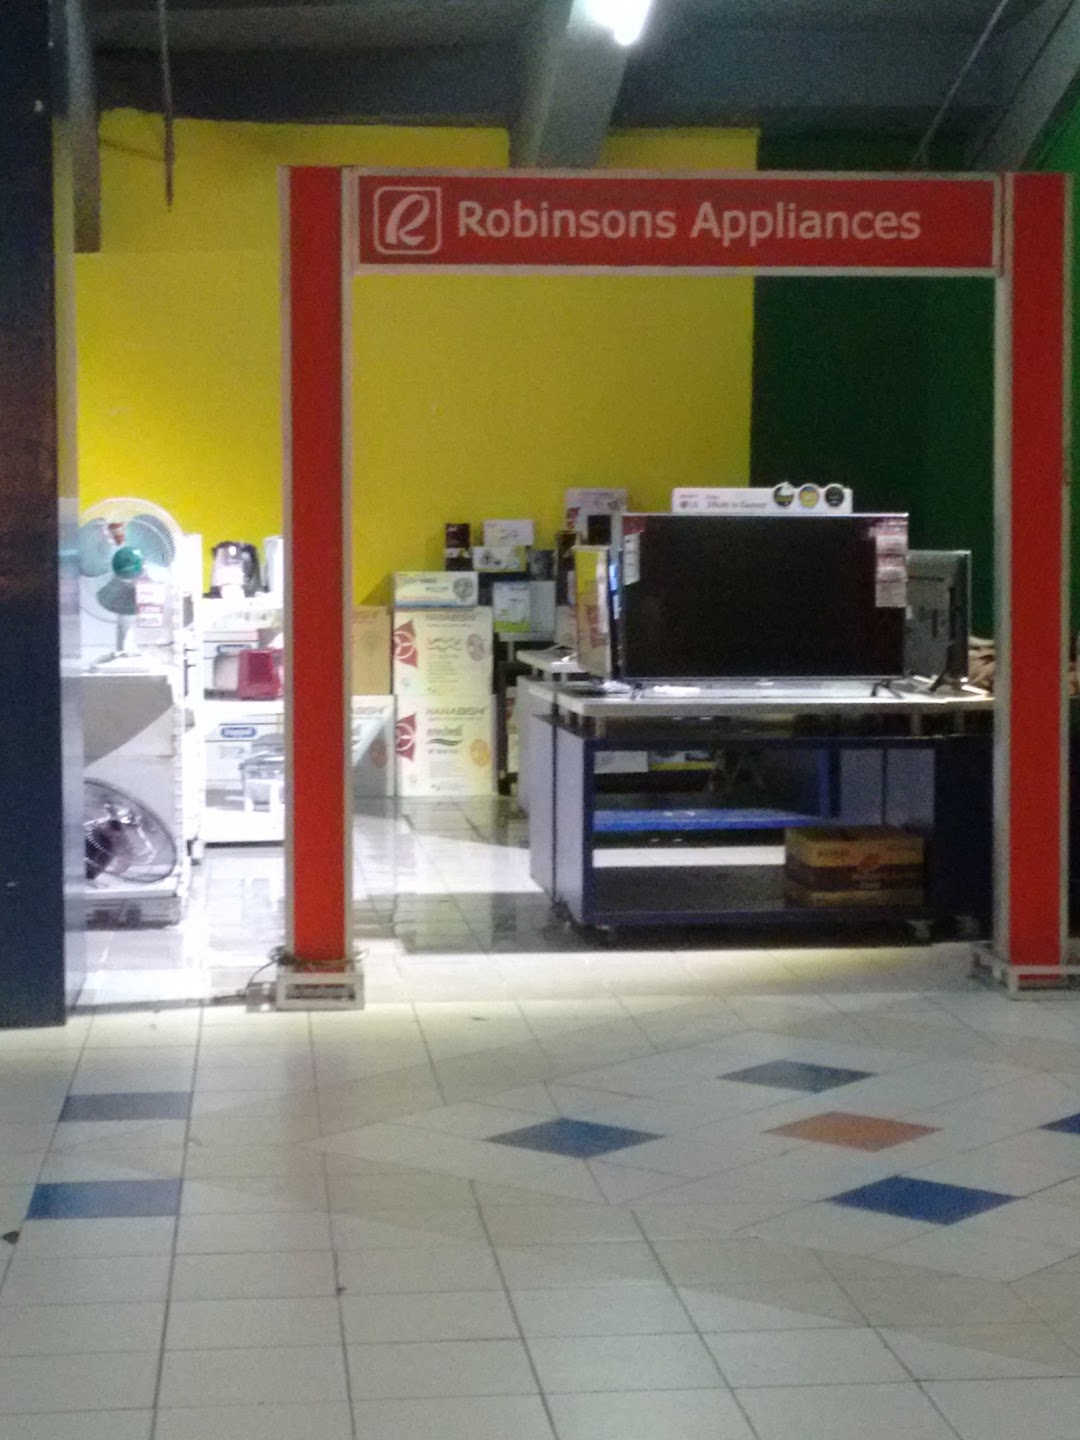 Robinsons Appliances